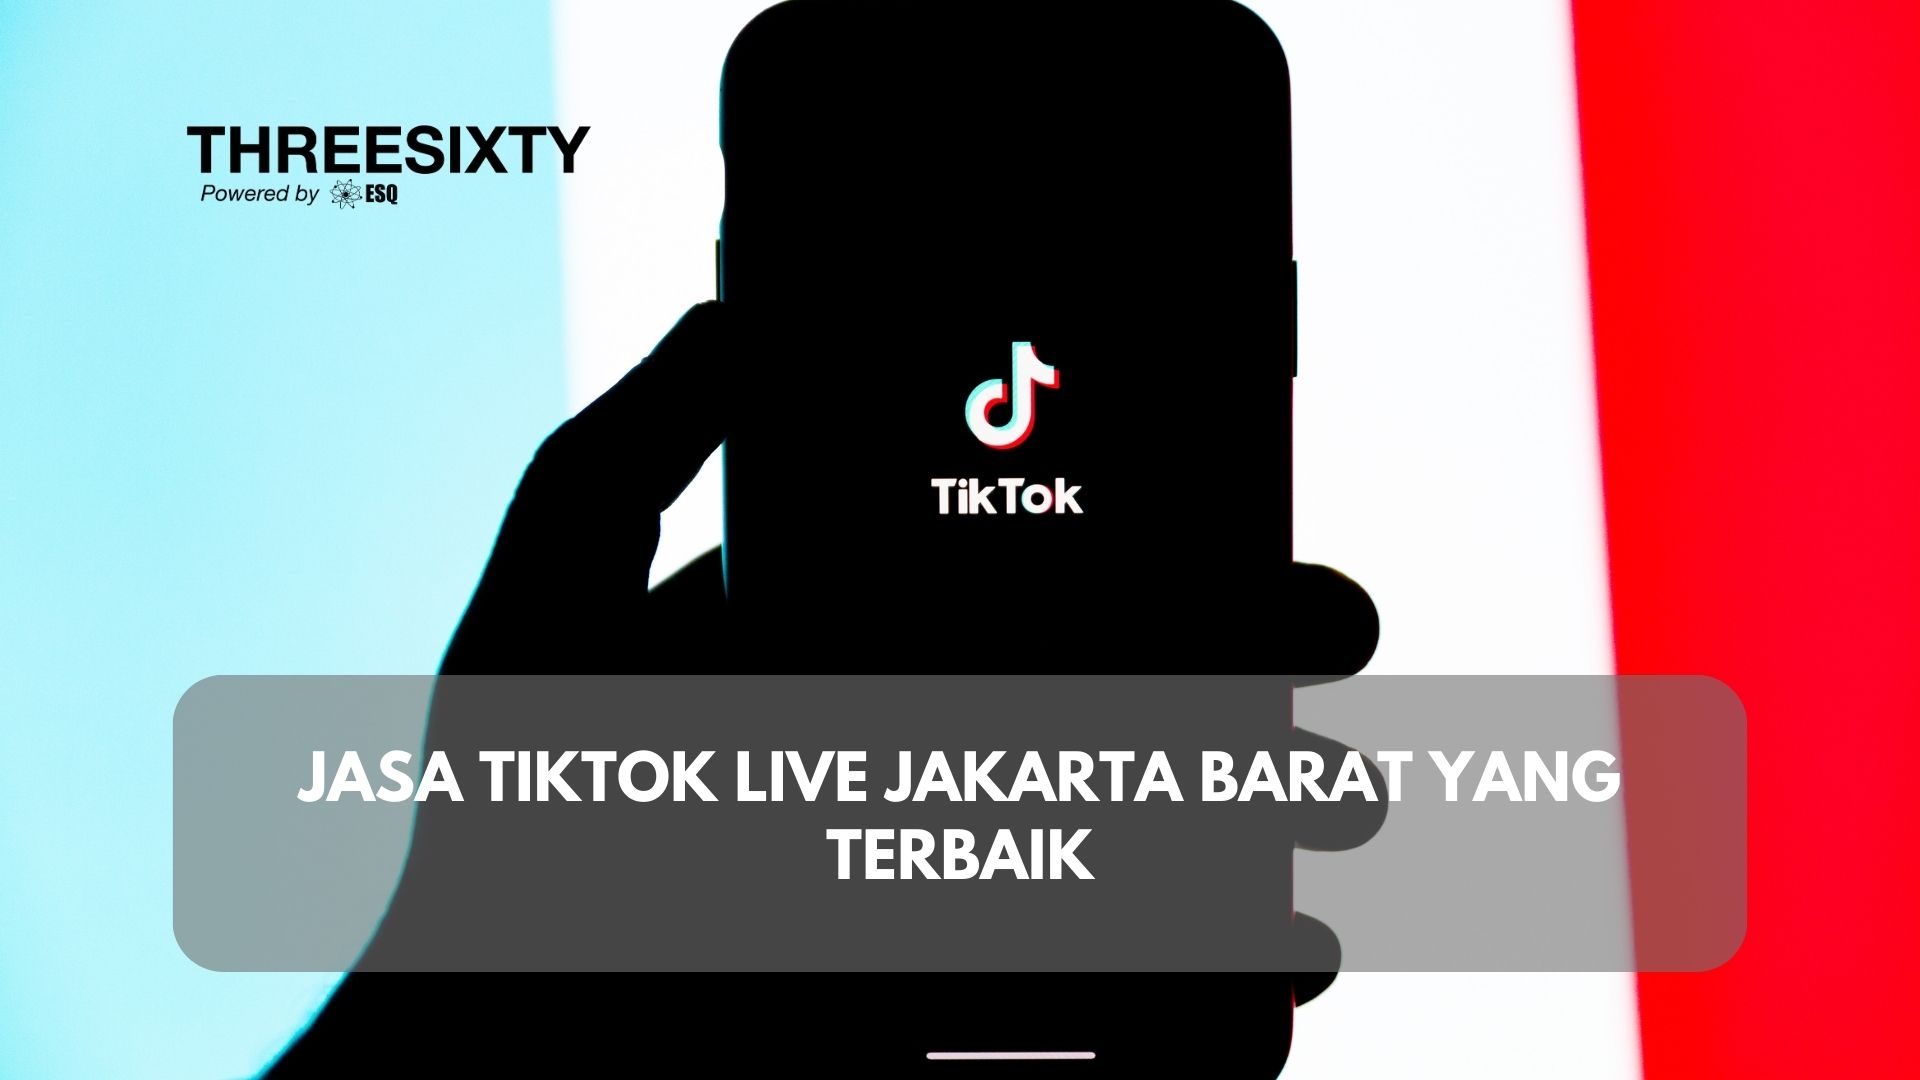 Jasa TikTok Live Jakarta Barat yang Terbaik